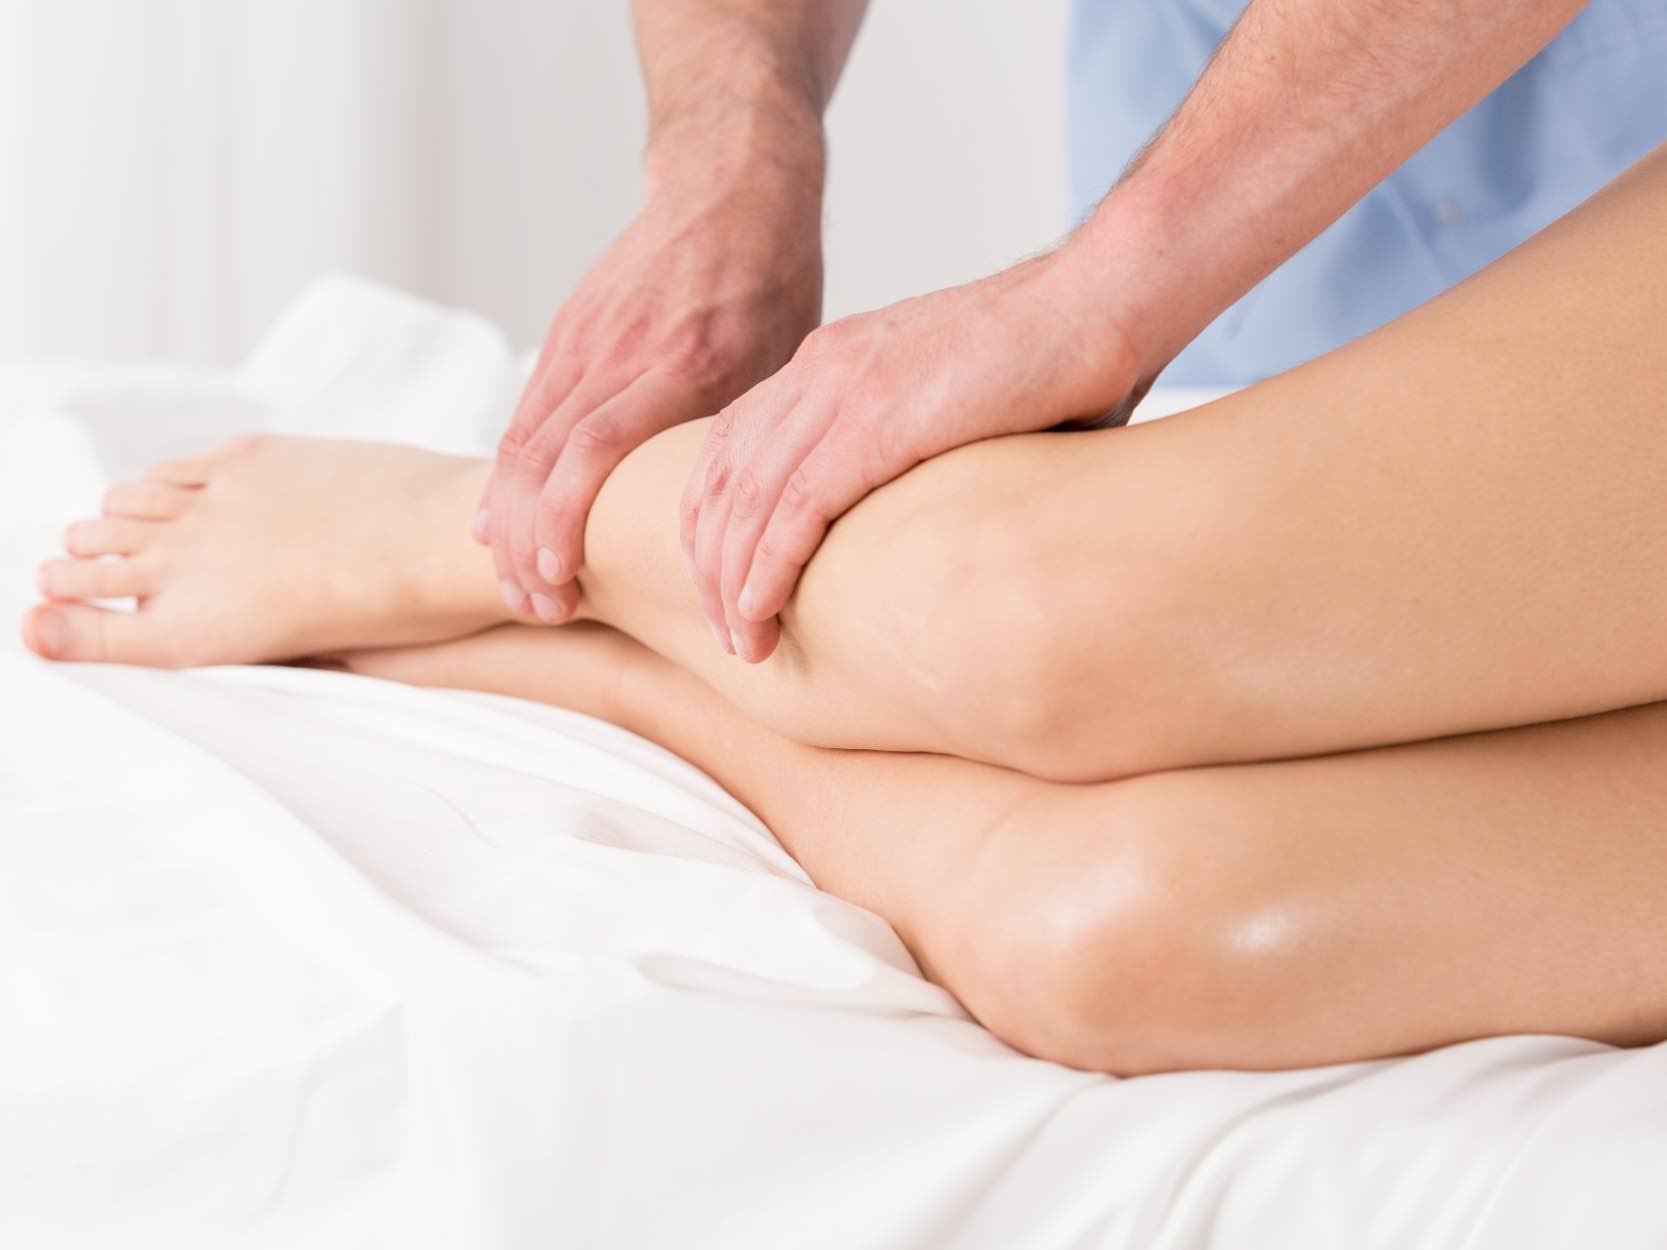 A doctor massaging a patient's legs